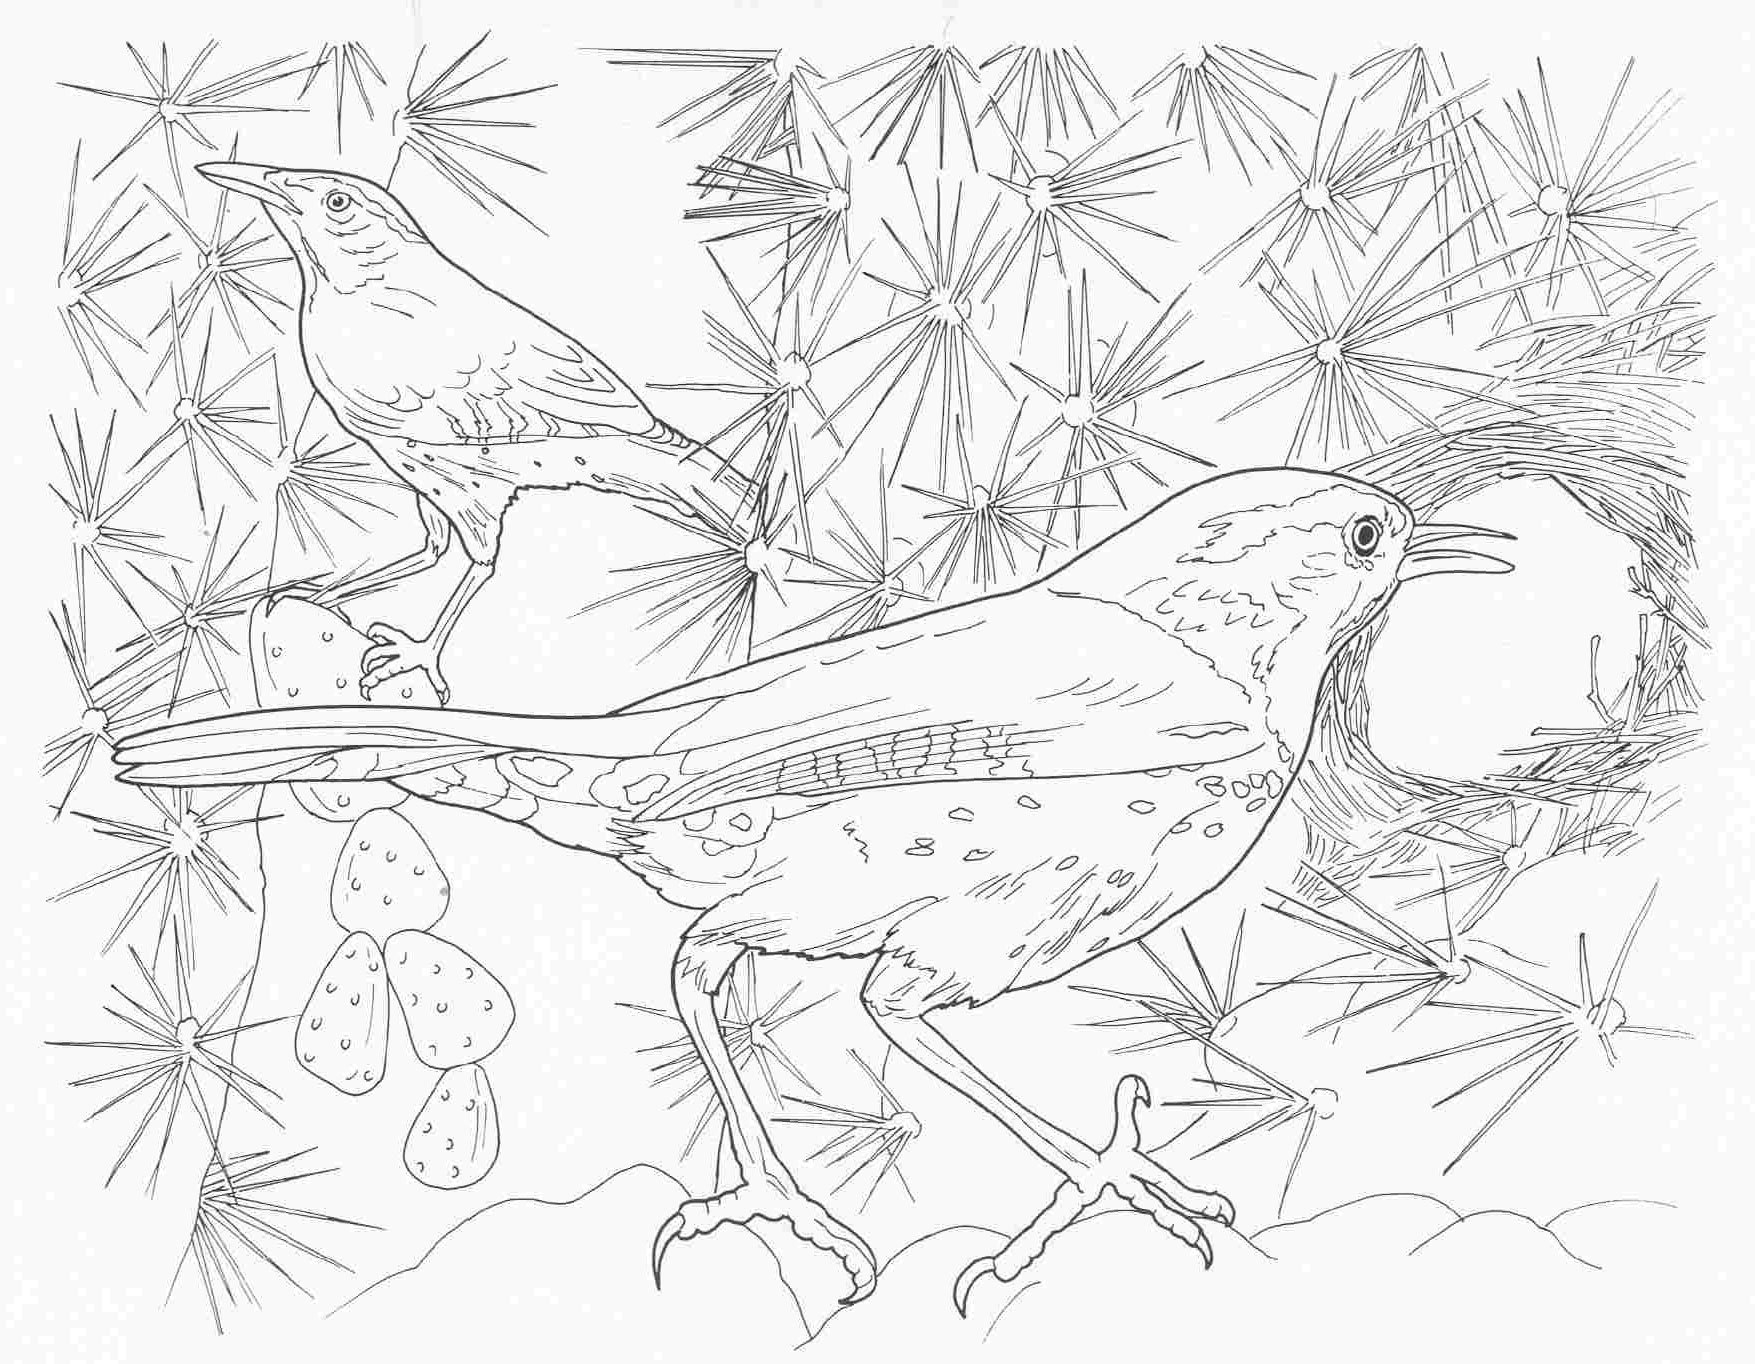 Carolina Wren Coloring Page Cactus Wren Coloring Page How Draw Cactus Wren 2 Coloring Pages